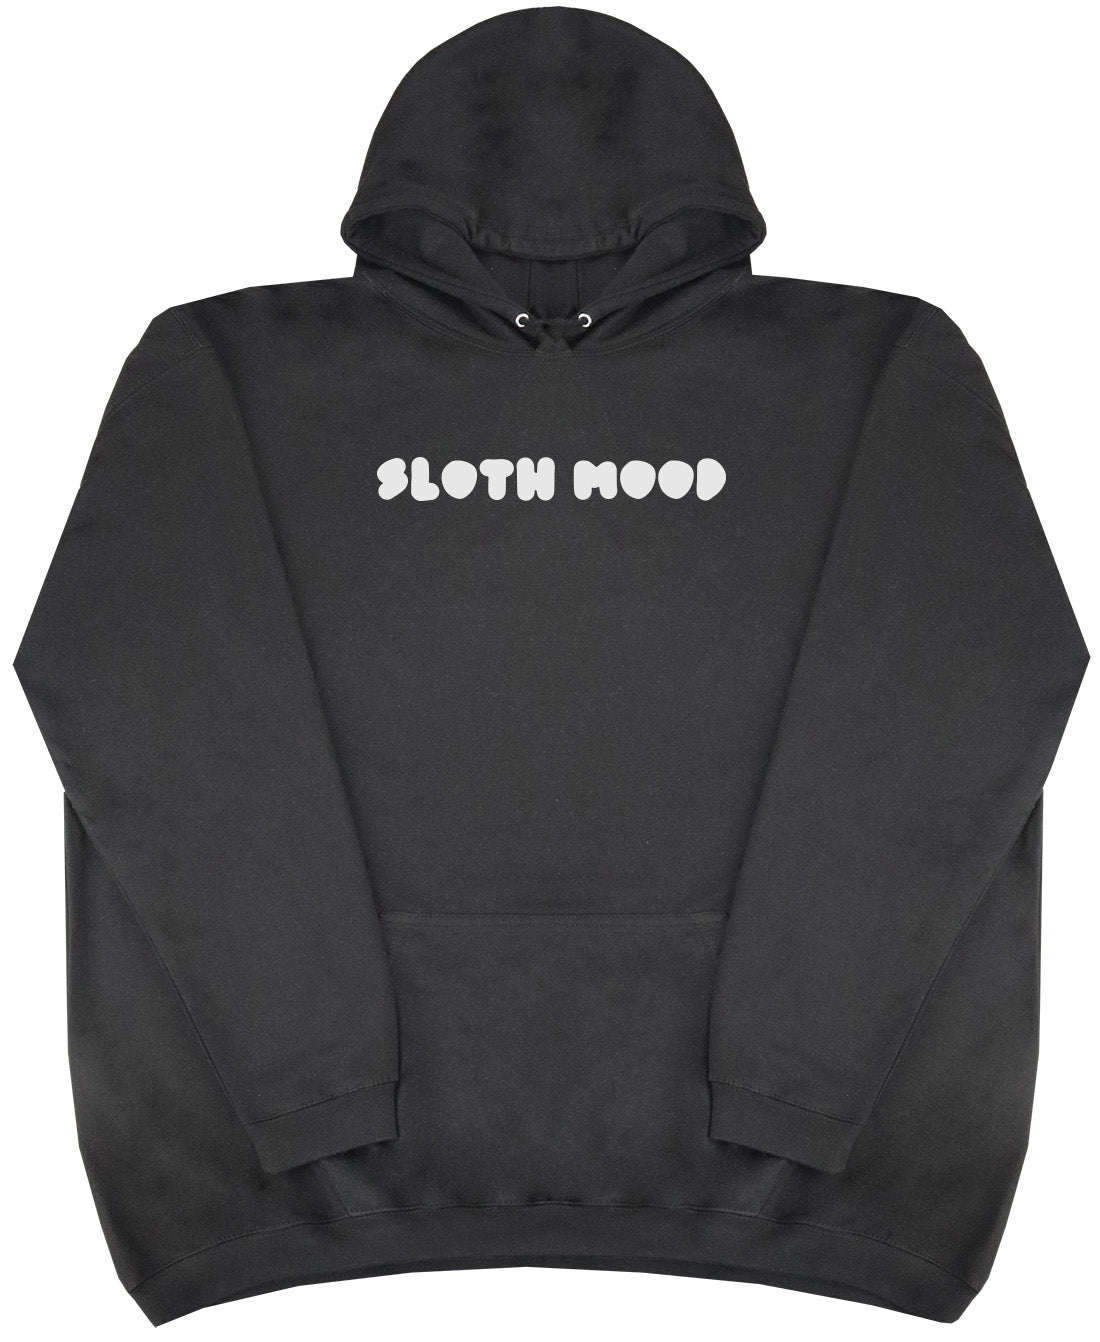 Sloth Mood - Huge Oversized Comfy Original Hoody